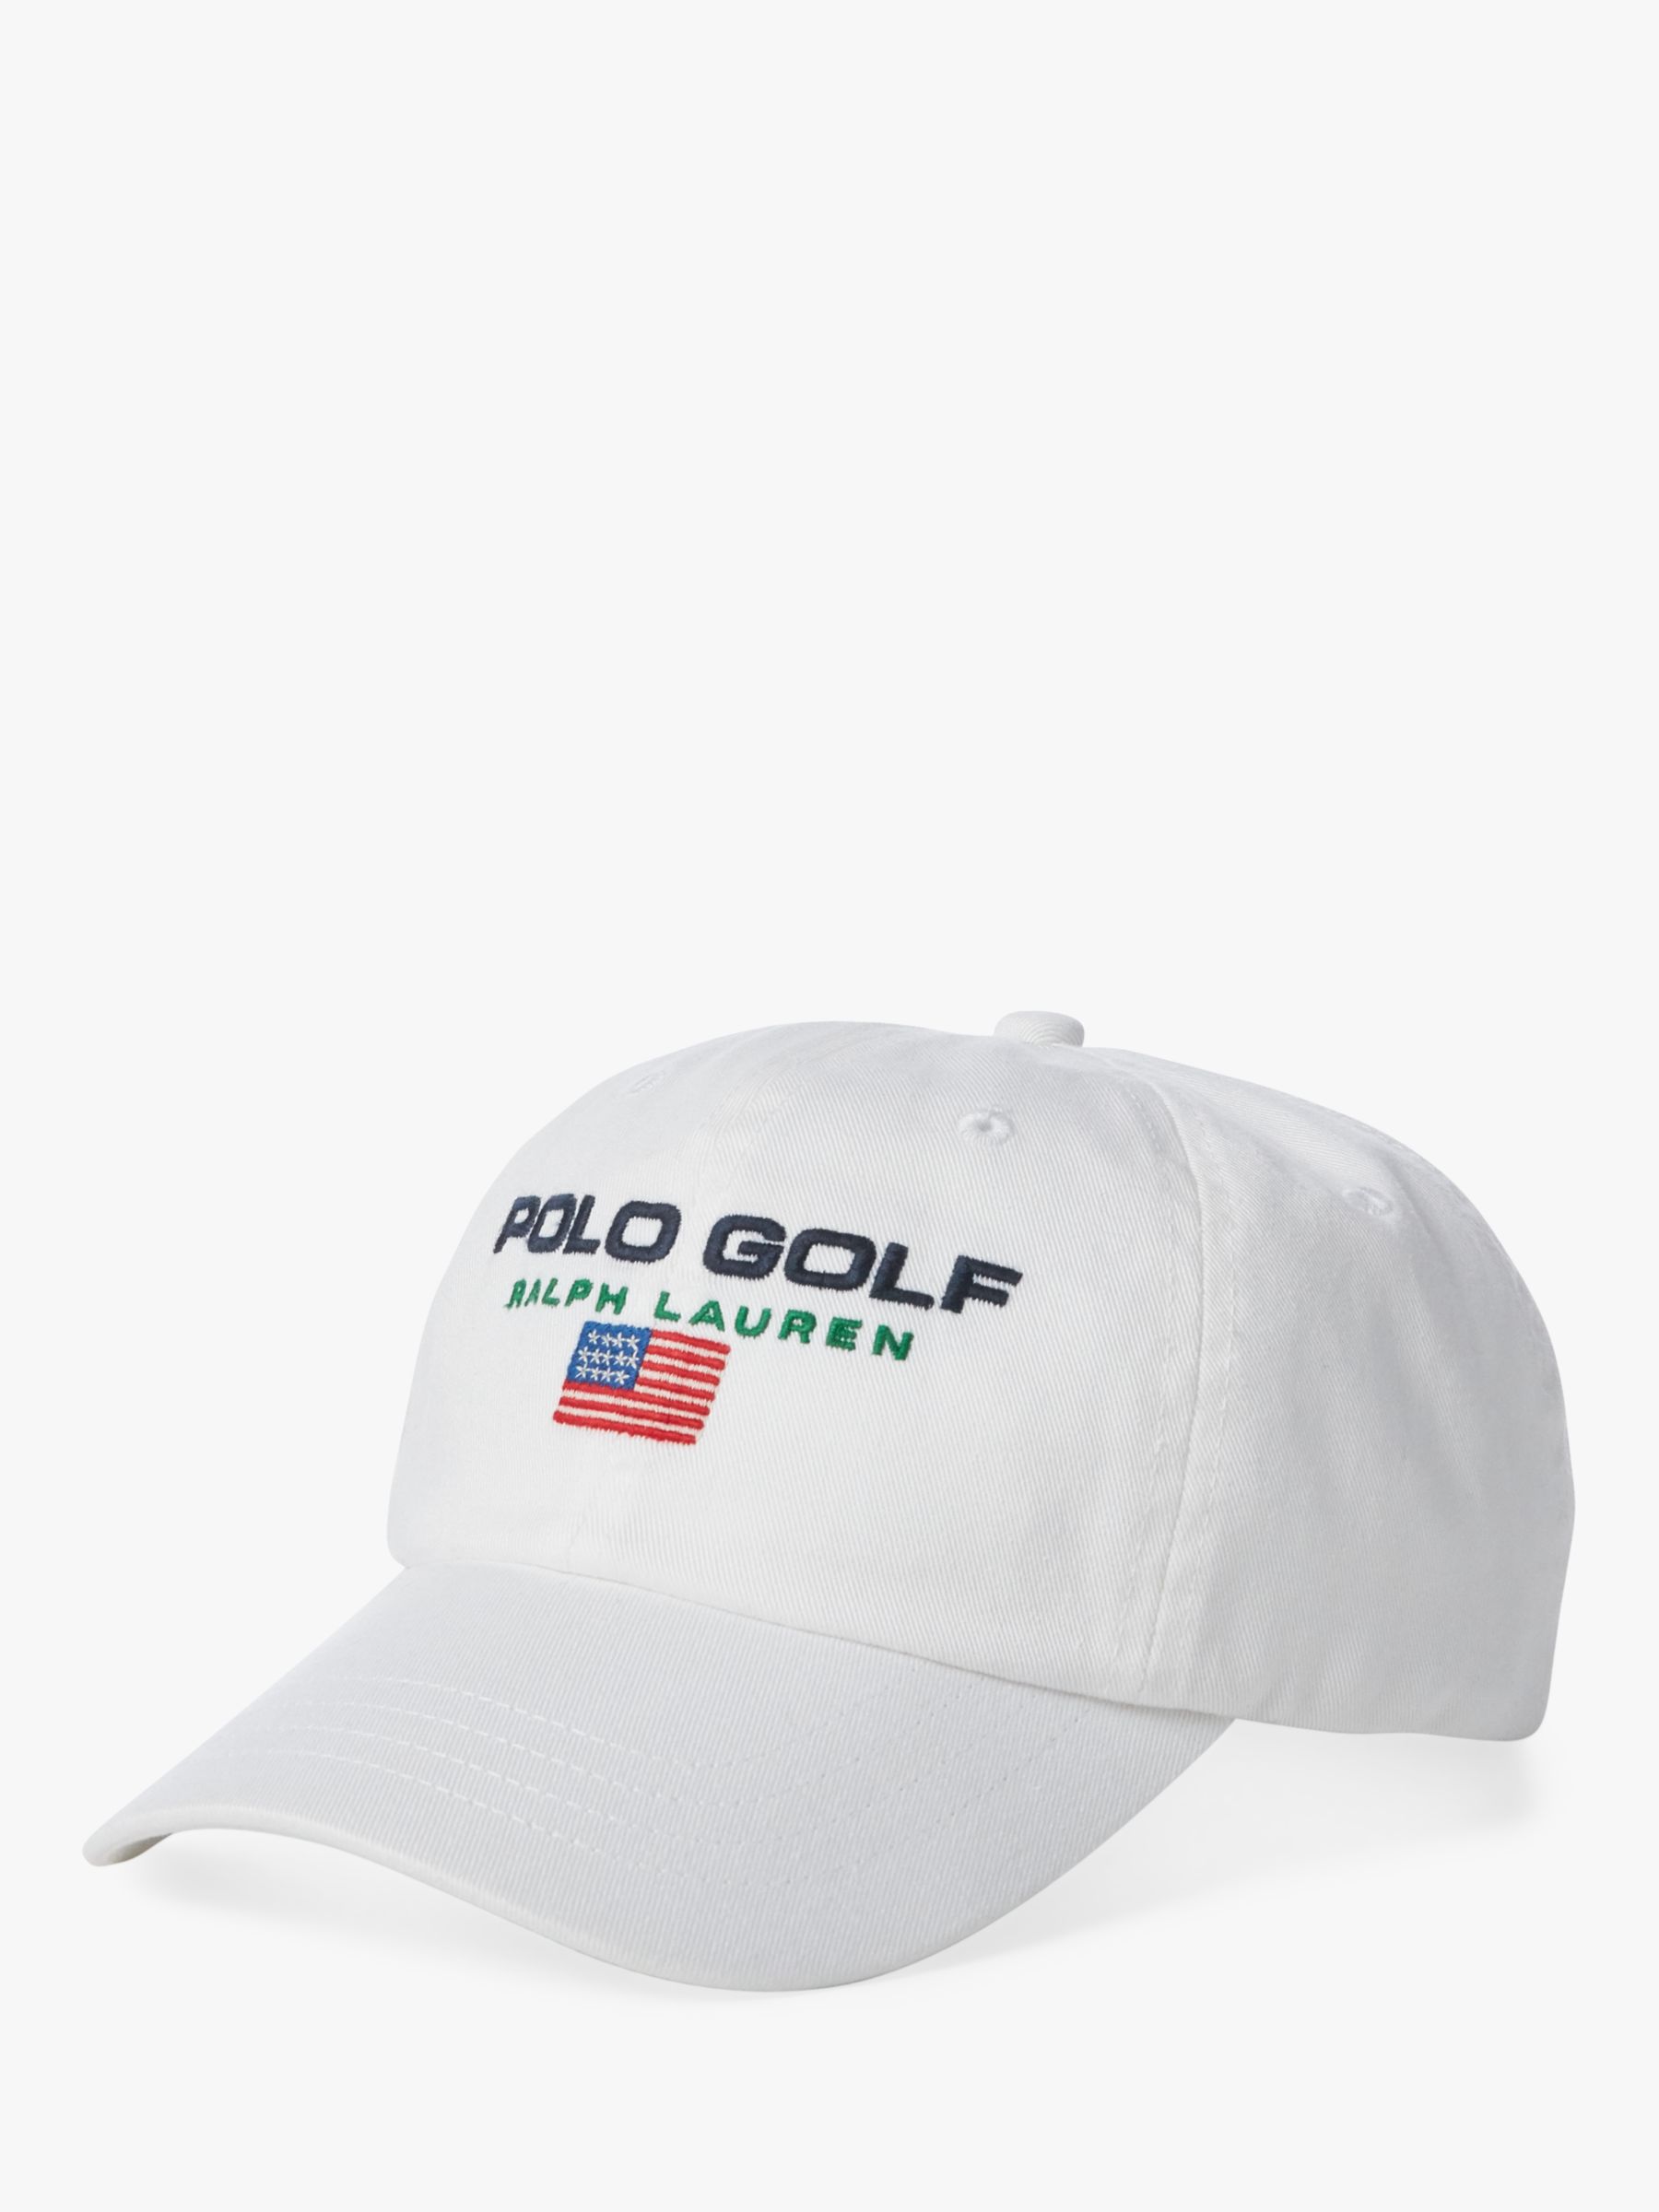 ralph lauren golf hat